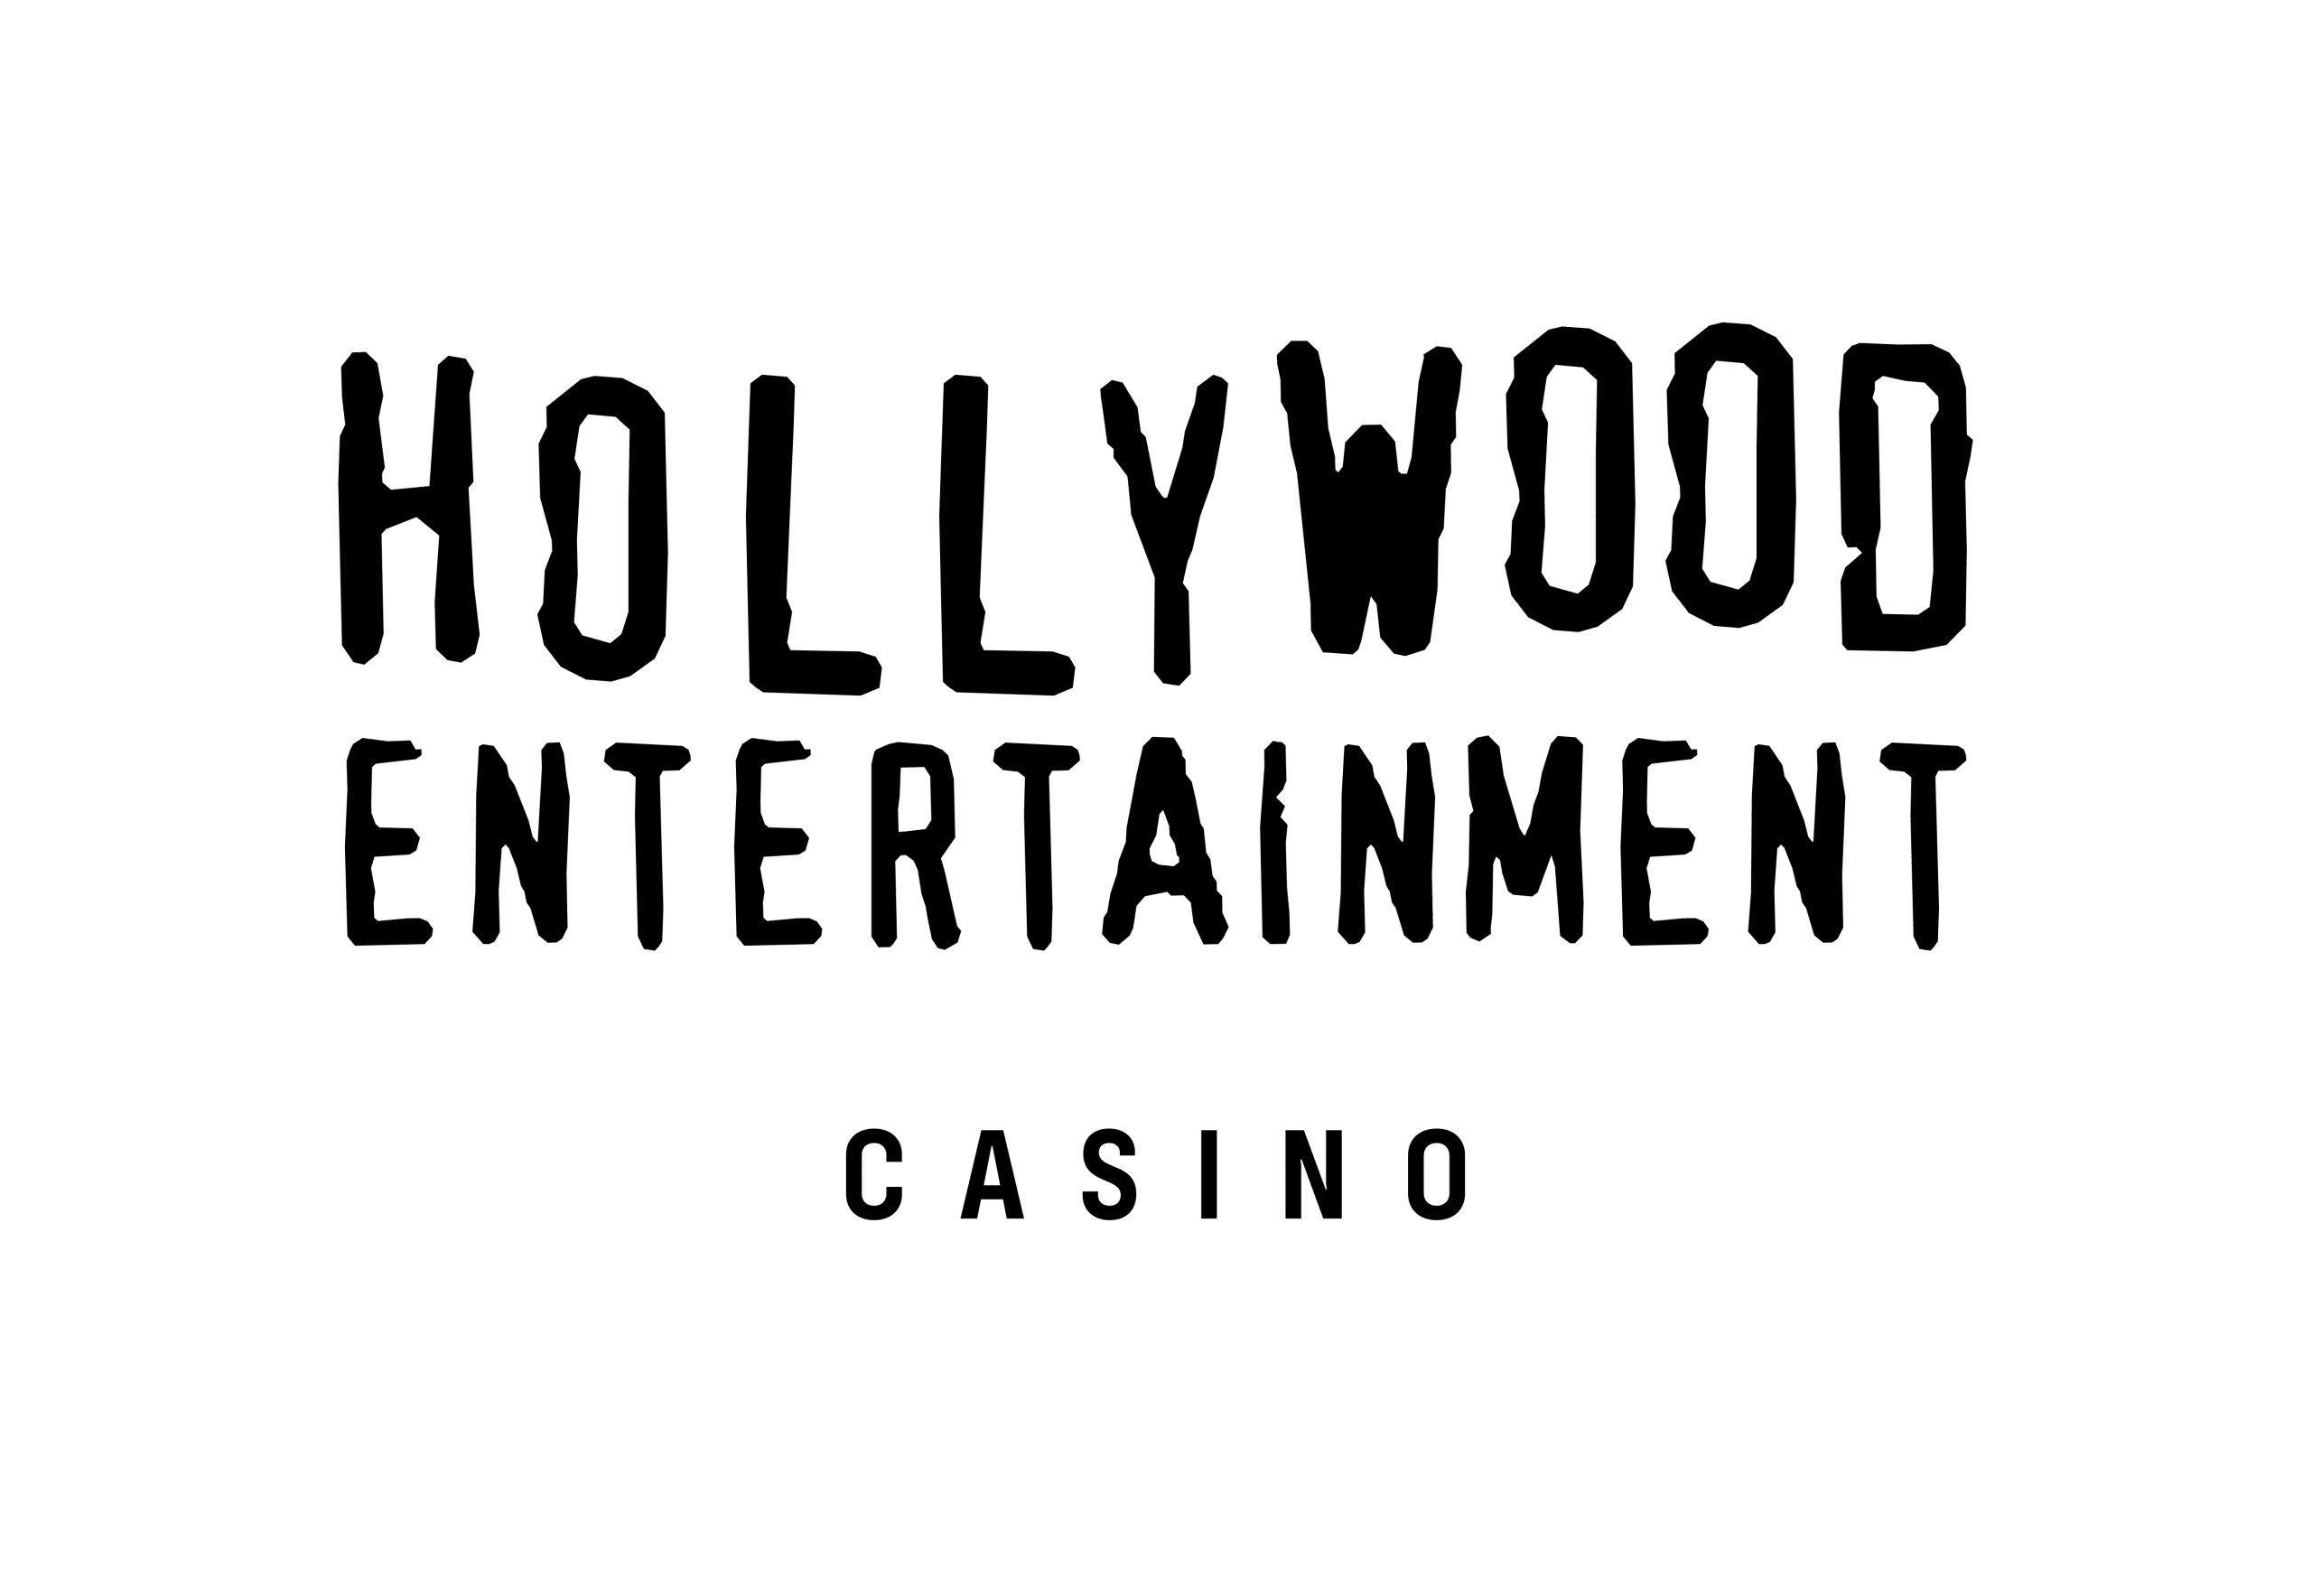 Hollywood Entertainment